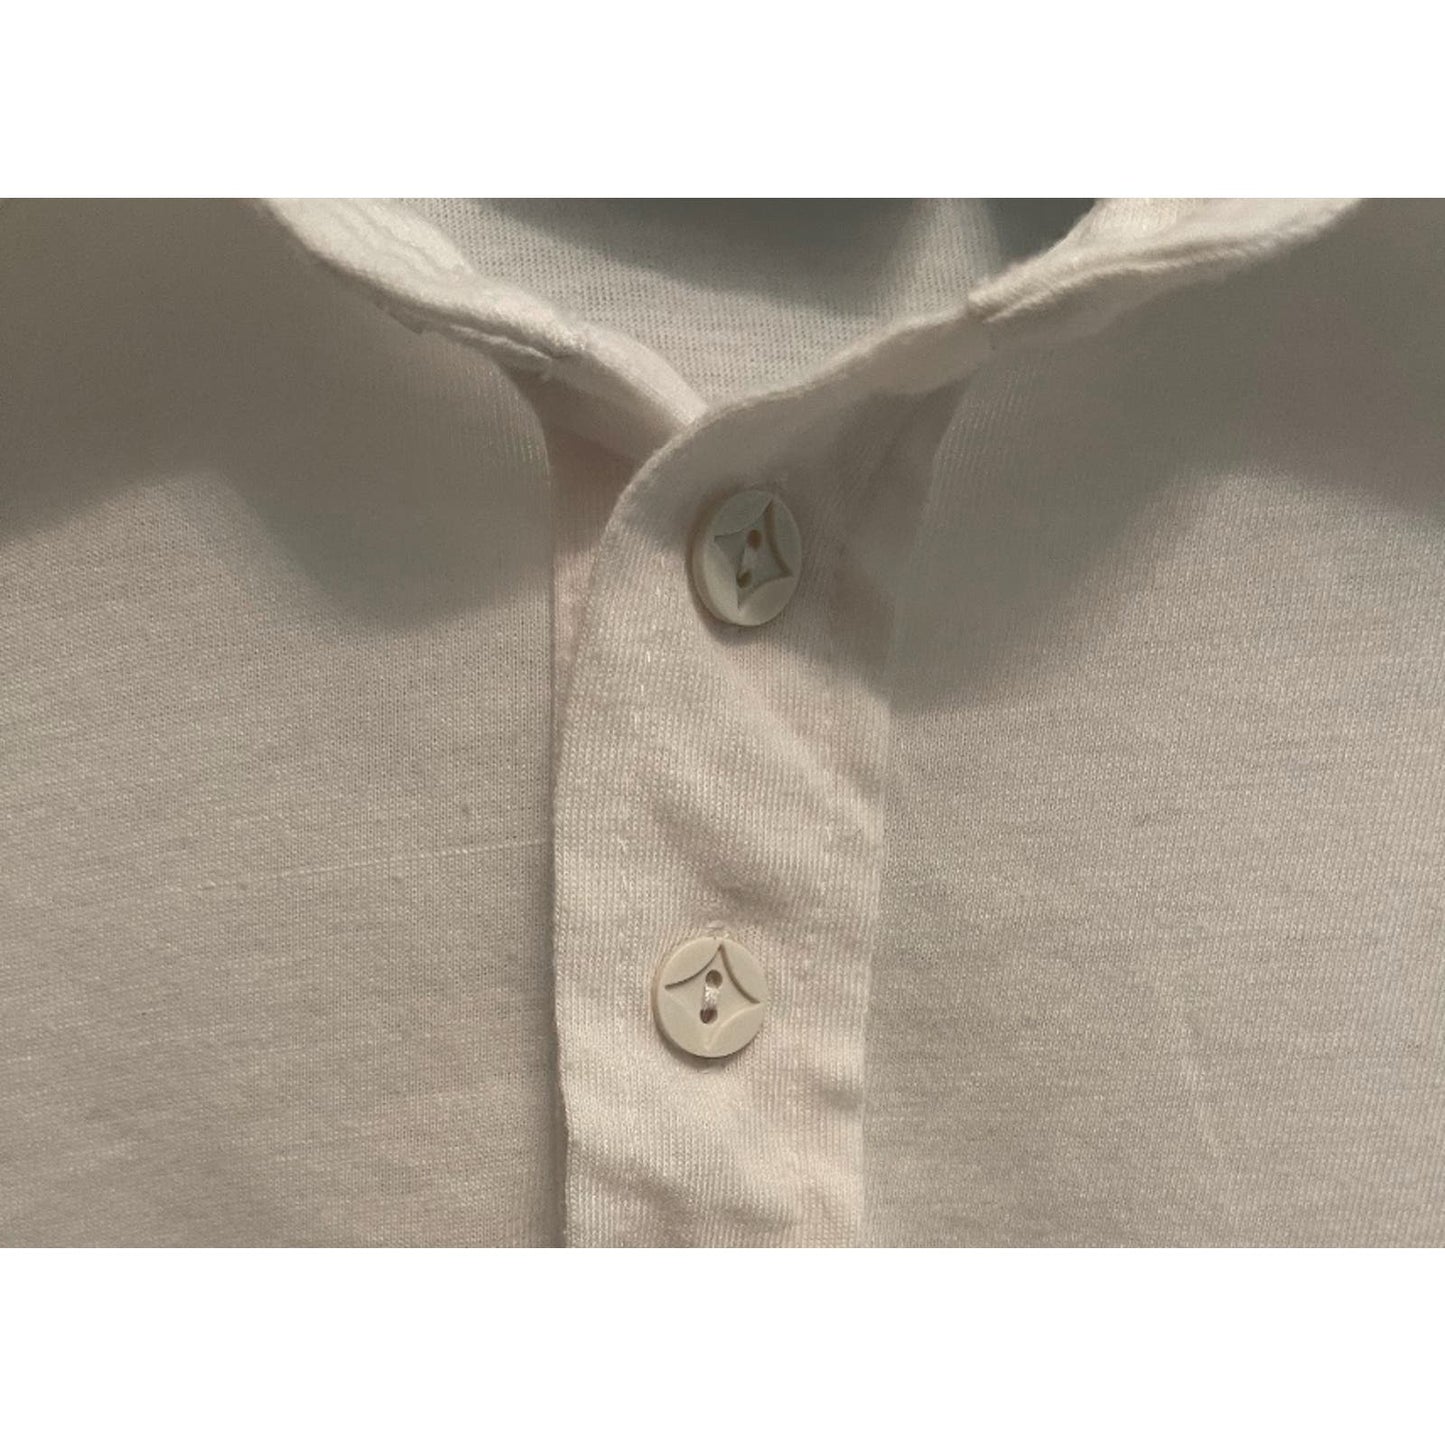 1980's Spalding XL Polo Shirt - Crisp White for Golf/Tennis Vintage